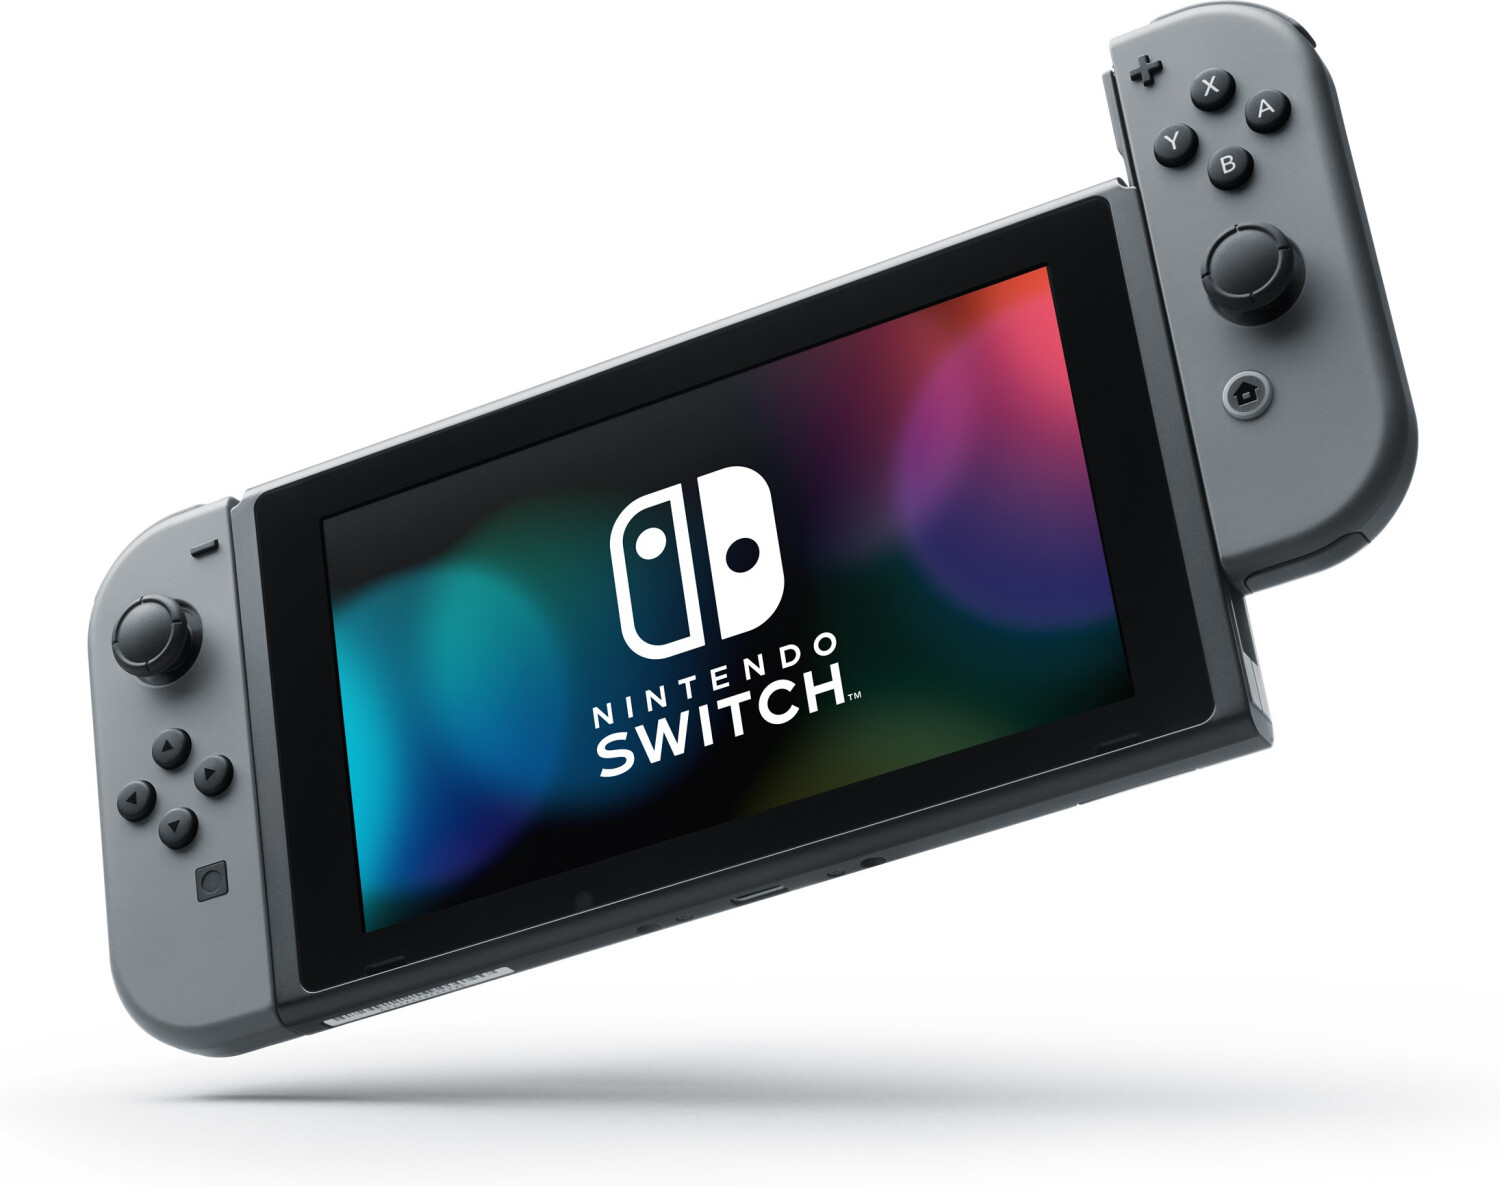 Nintendo Switch Sports, Características, Precio